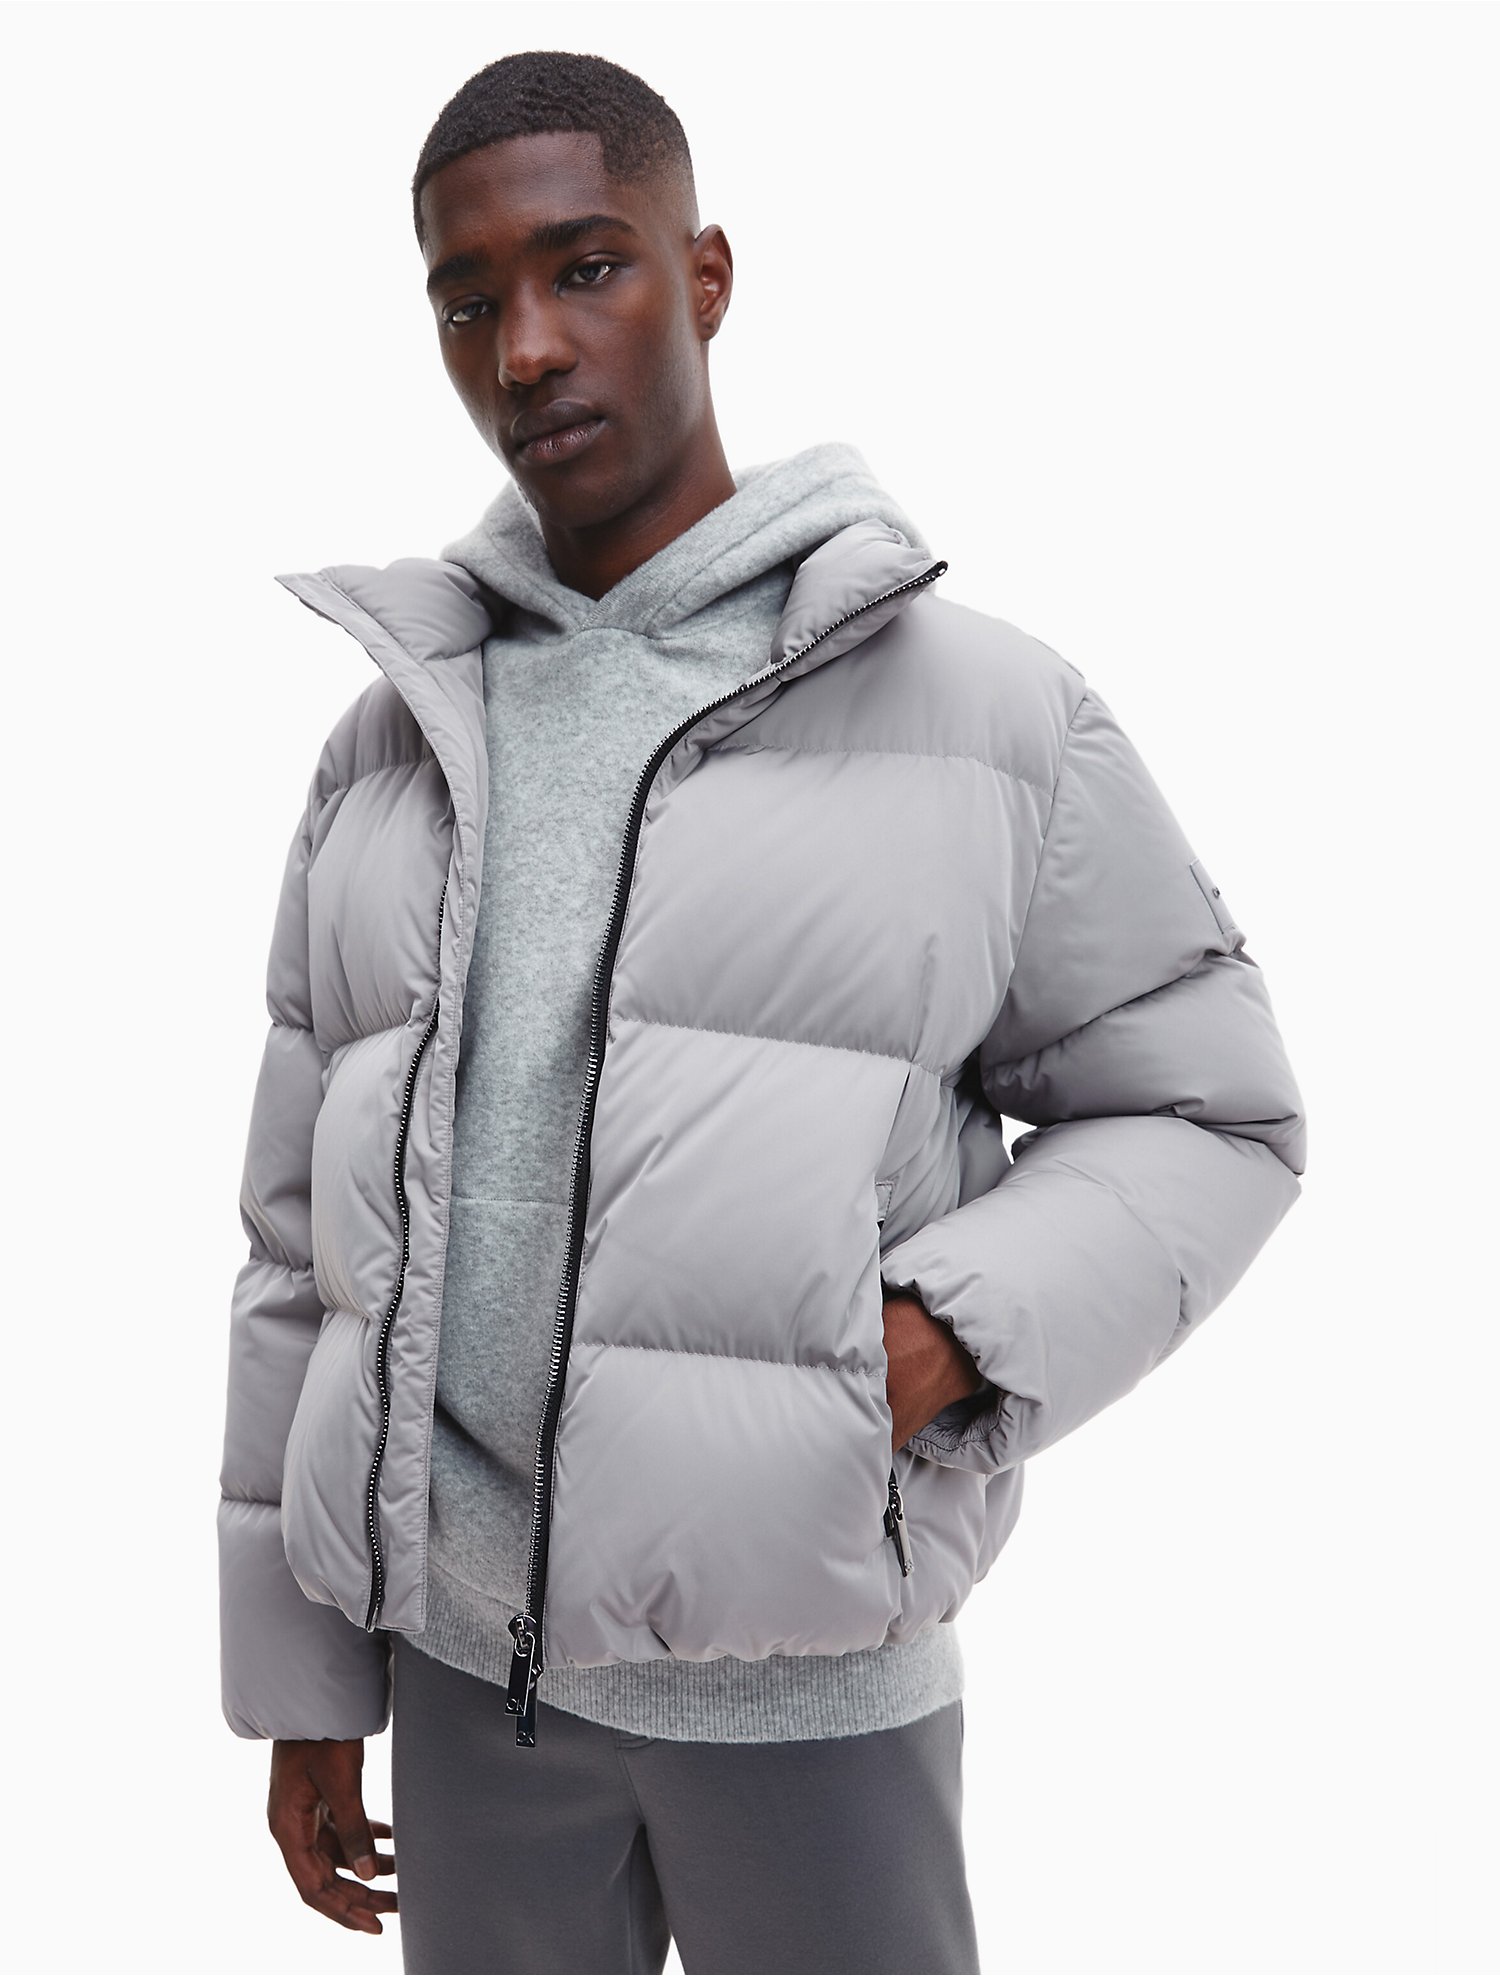 Introducir 73+ imagen calvin klein grey jacket mens